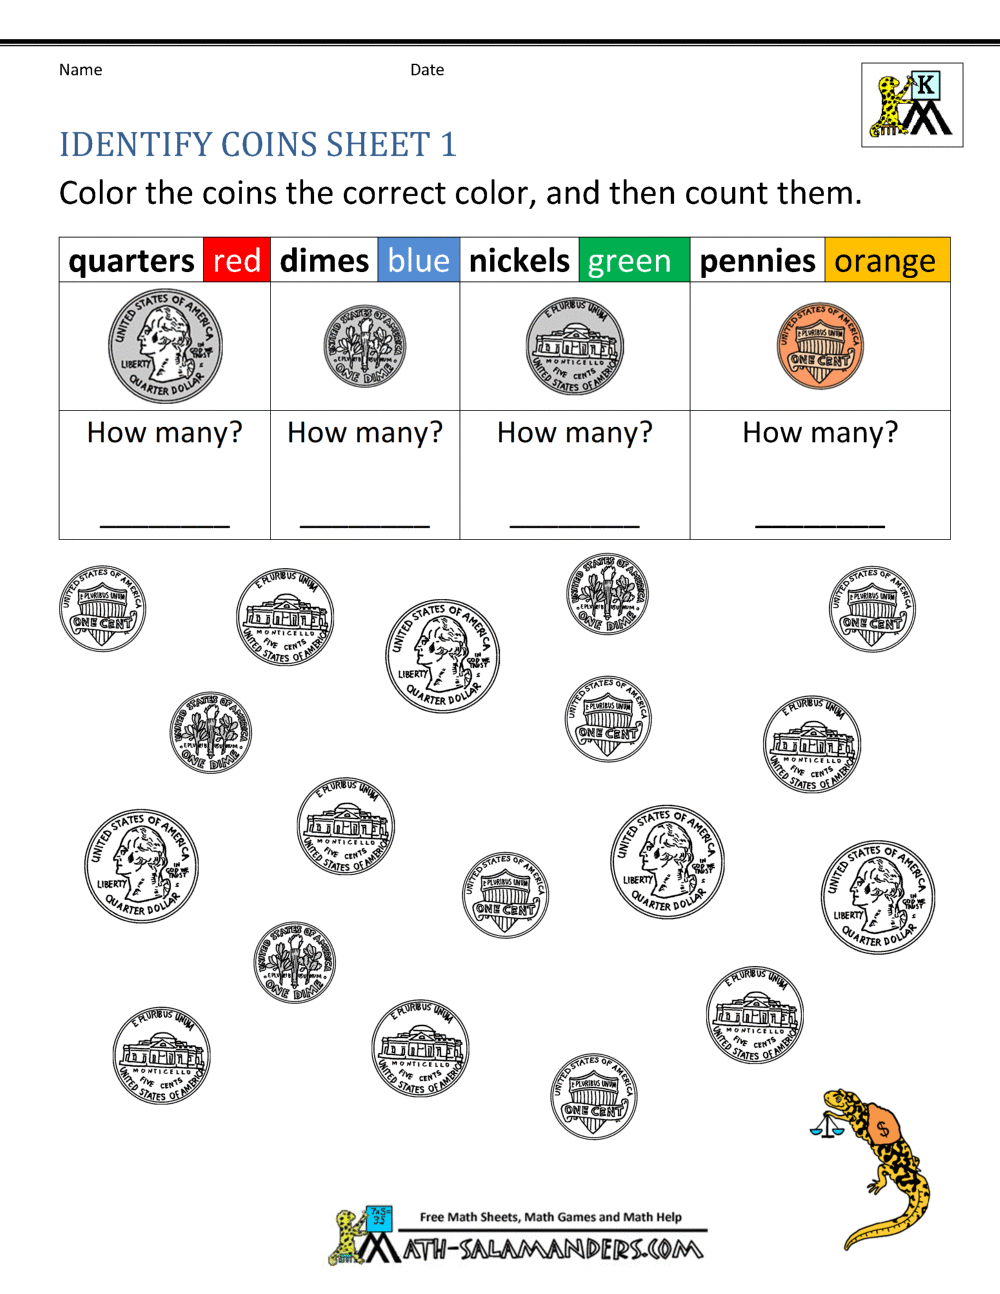 kindergarten-printable-worksheets-identify-coins-1-gif-800-1035